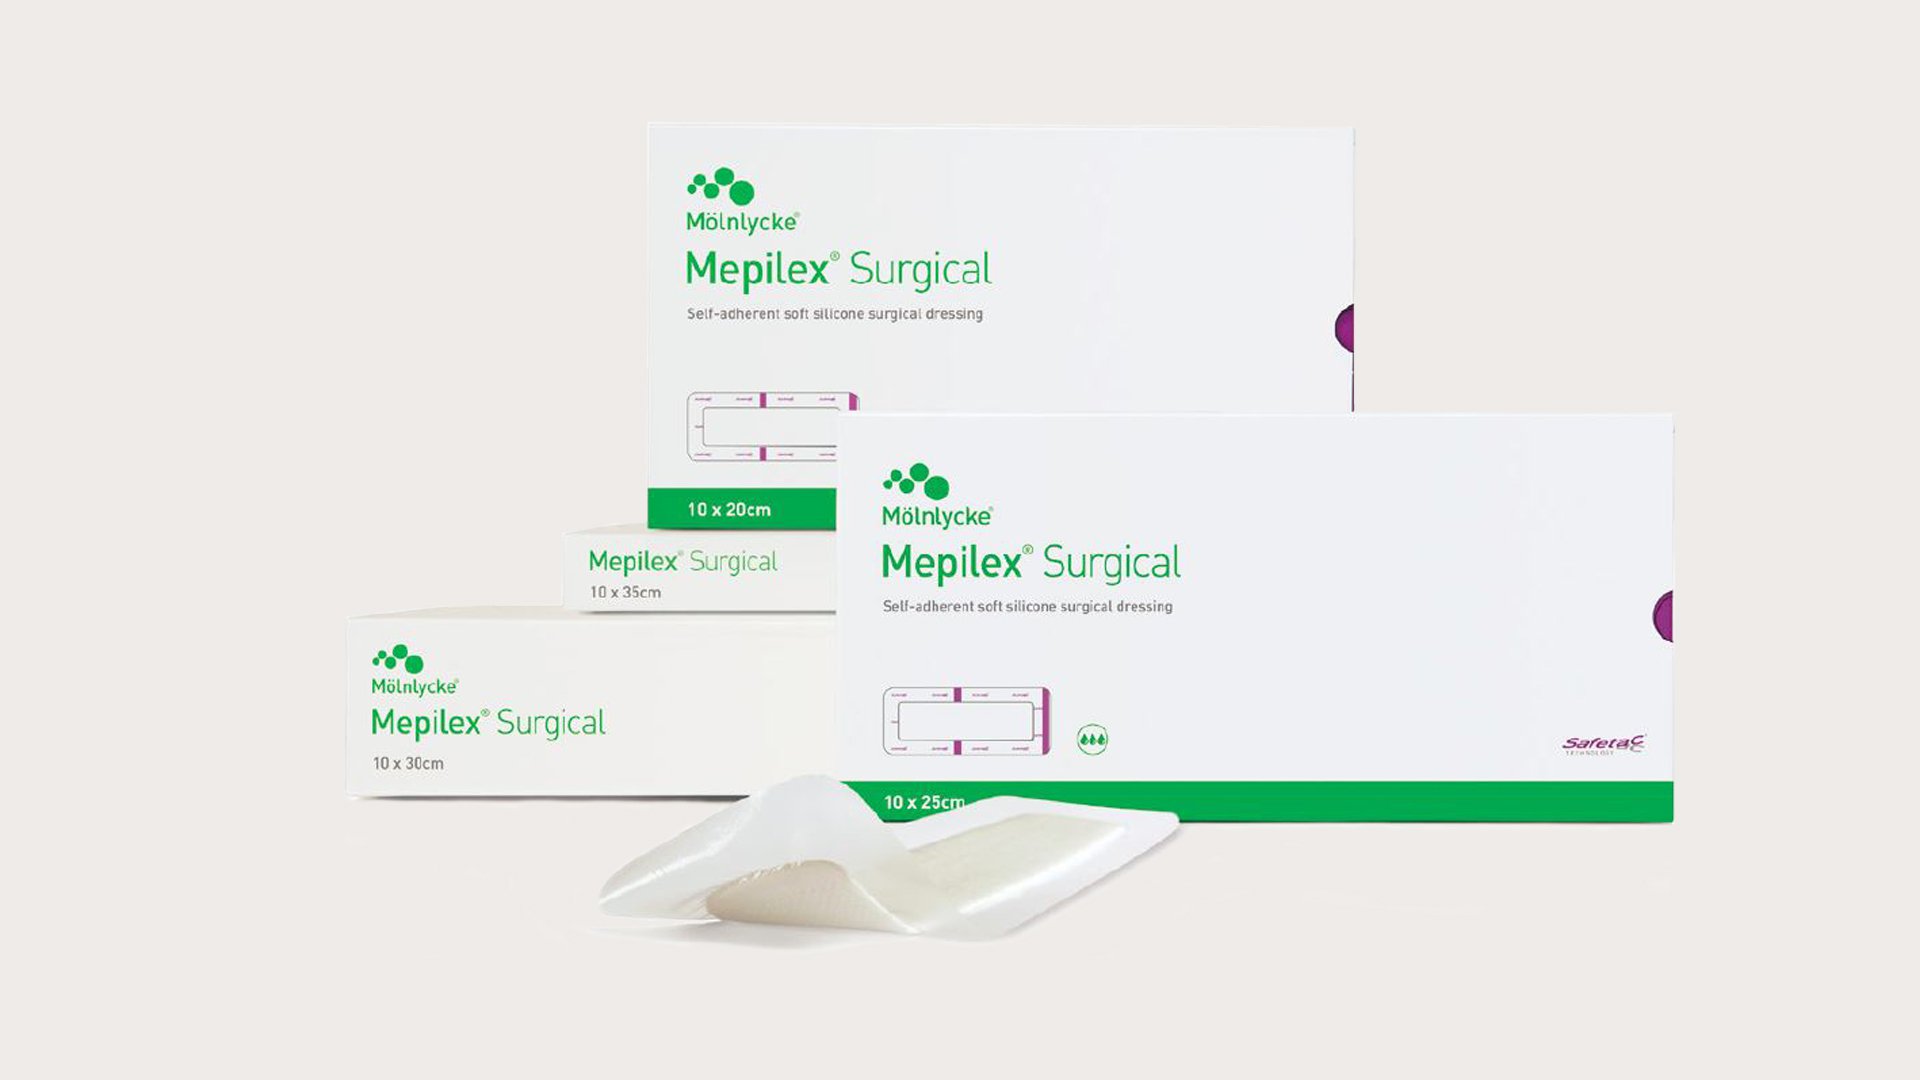 Mepilex Surgical image